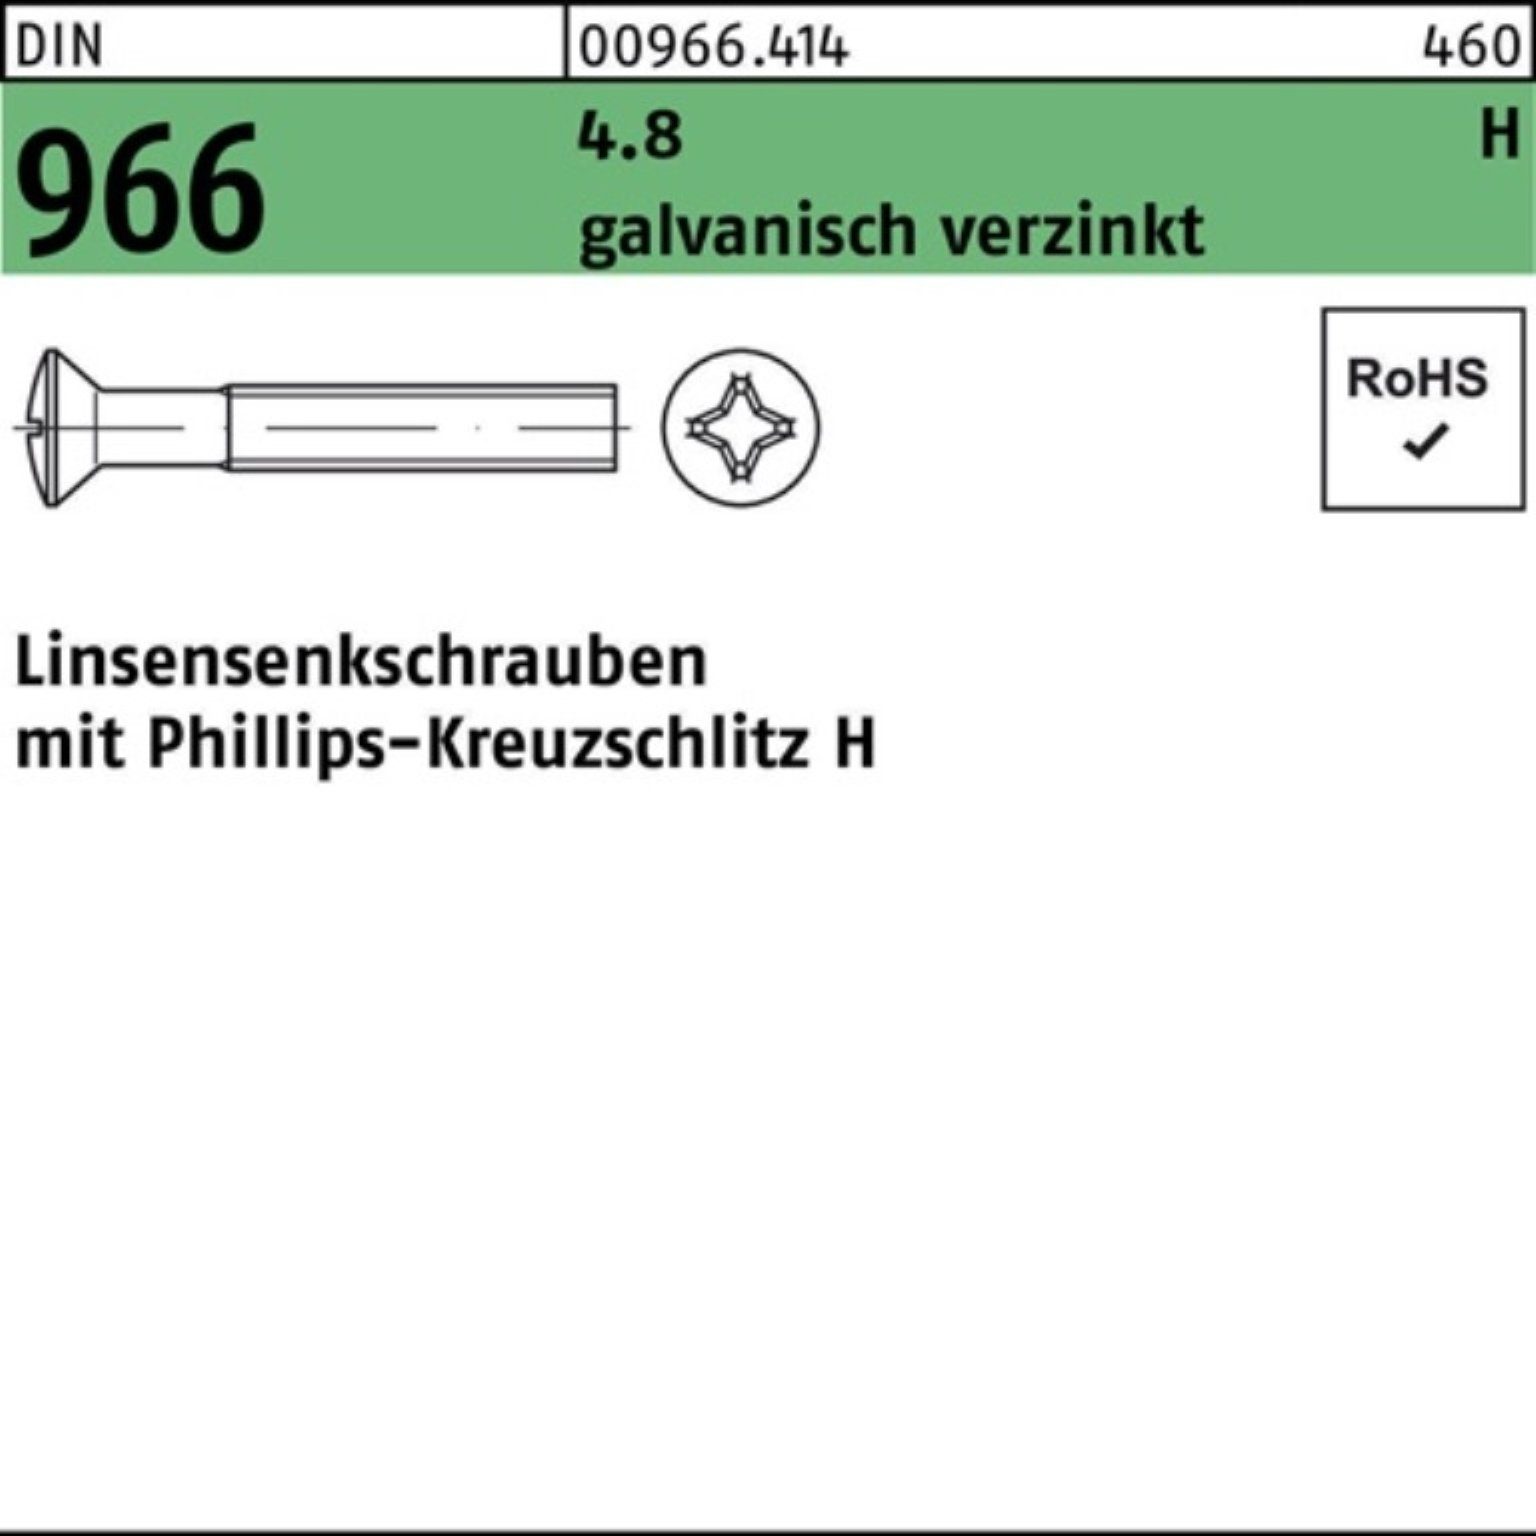 M4x16-H Linsensenkschraube 200er PH DIN Kreuzschlitz 966 Reyher 4.8 galv Pack Linsenschraube